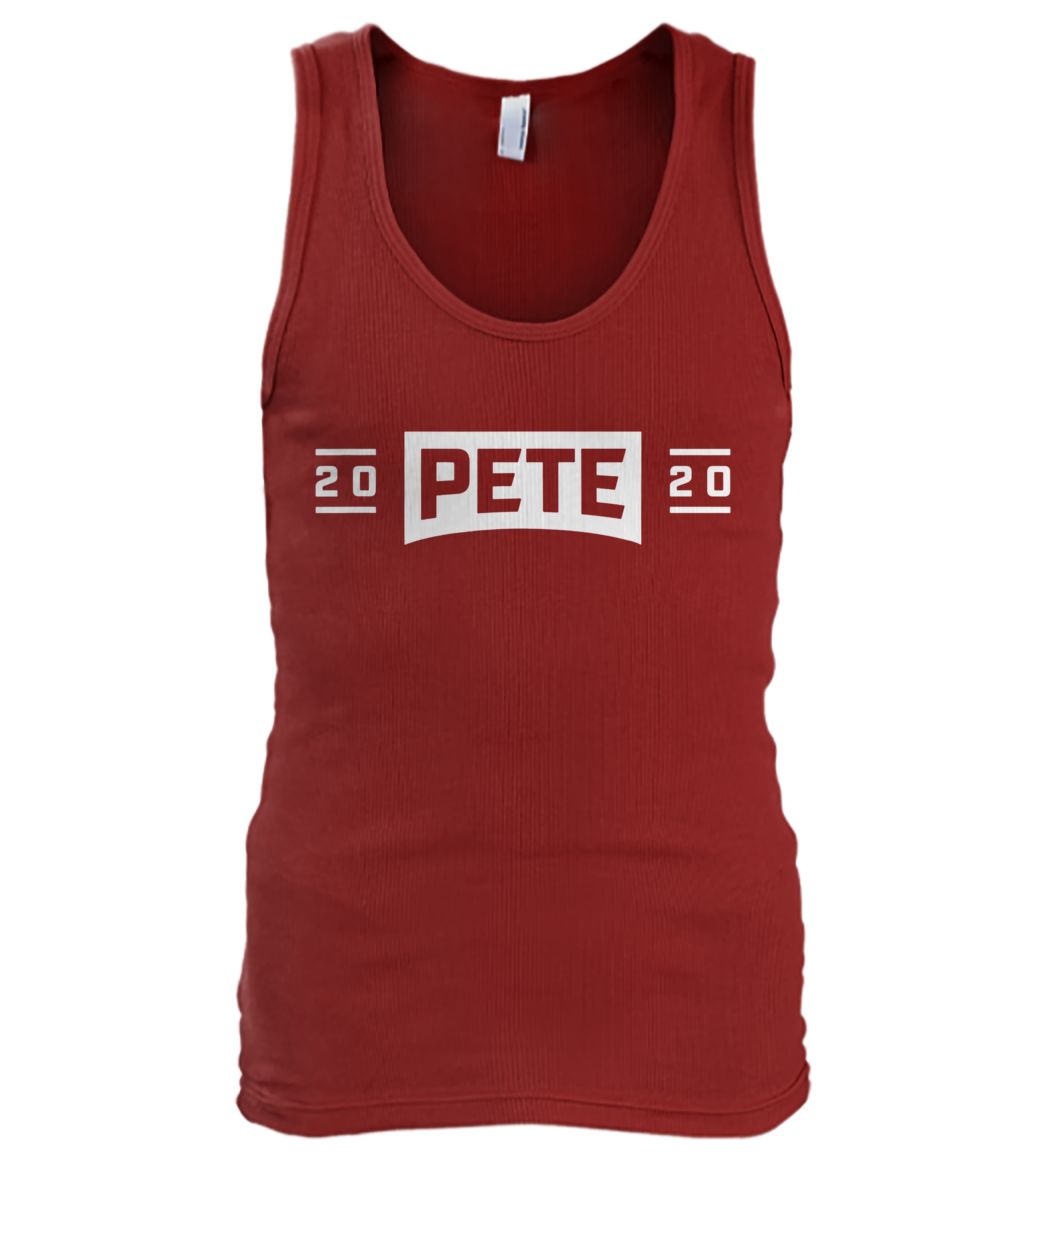 Pete buttigieg for president 2020 election men's tank top